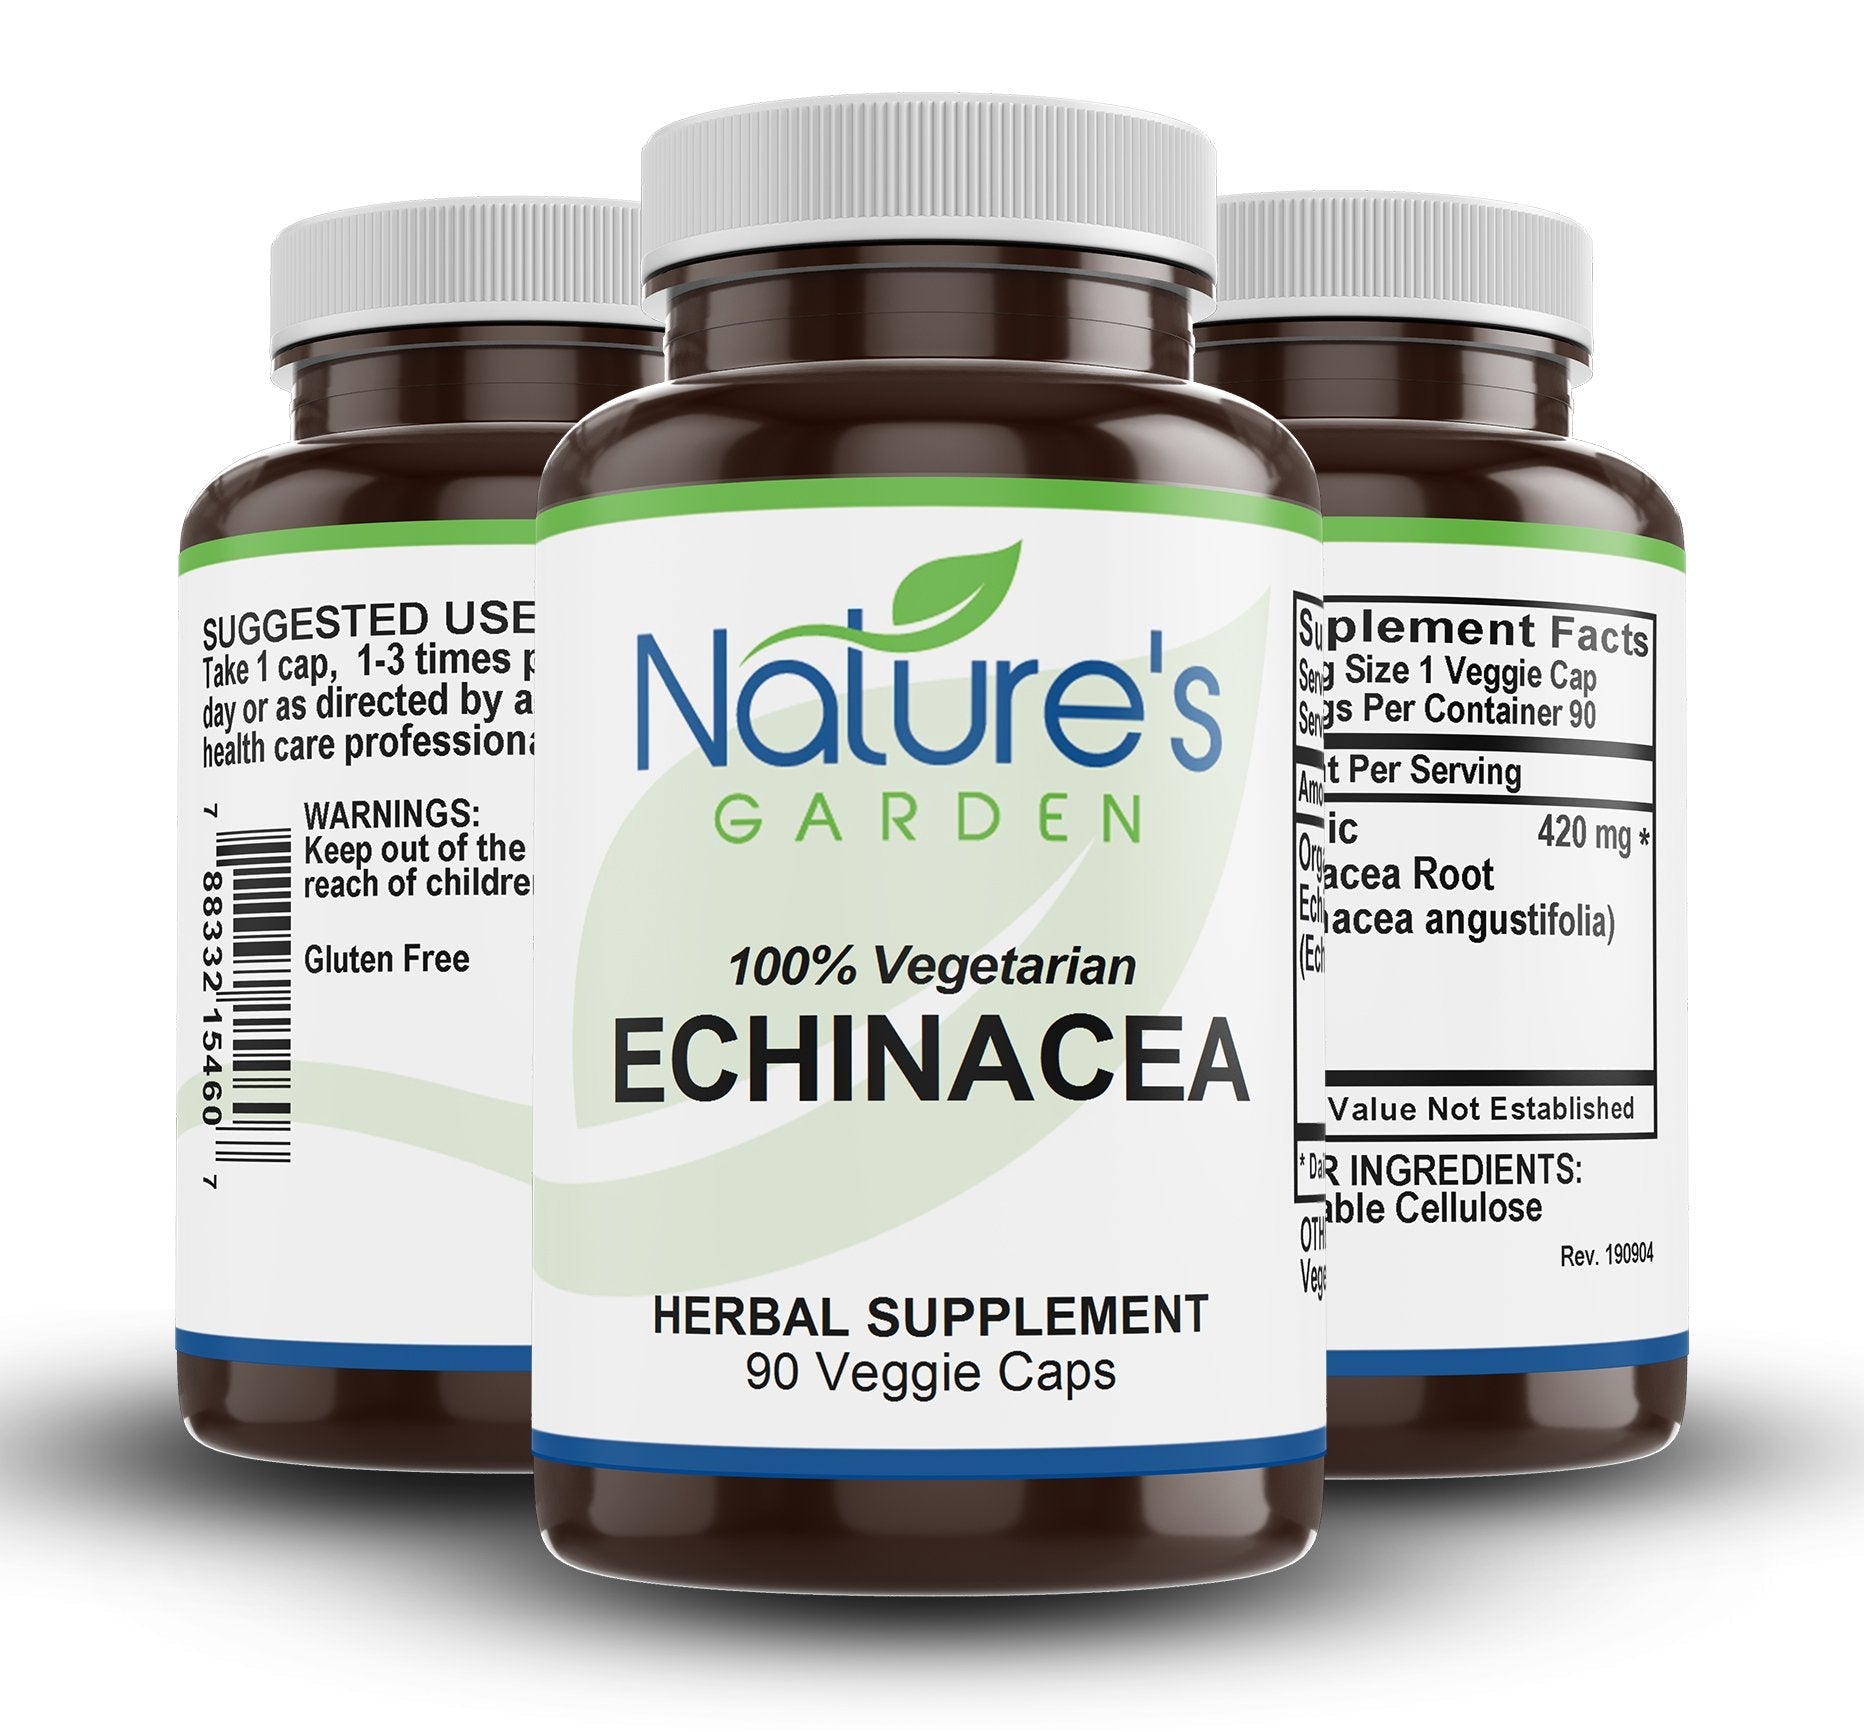 Echinacea angustifolia root - 90 Veggie Caps with 420mg Organic Echinacea Root